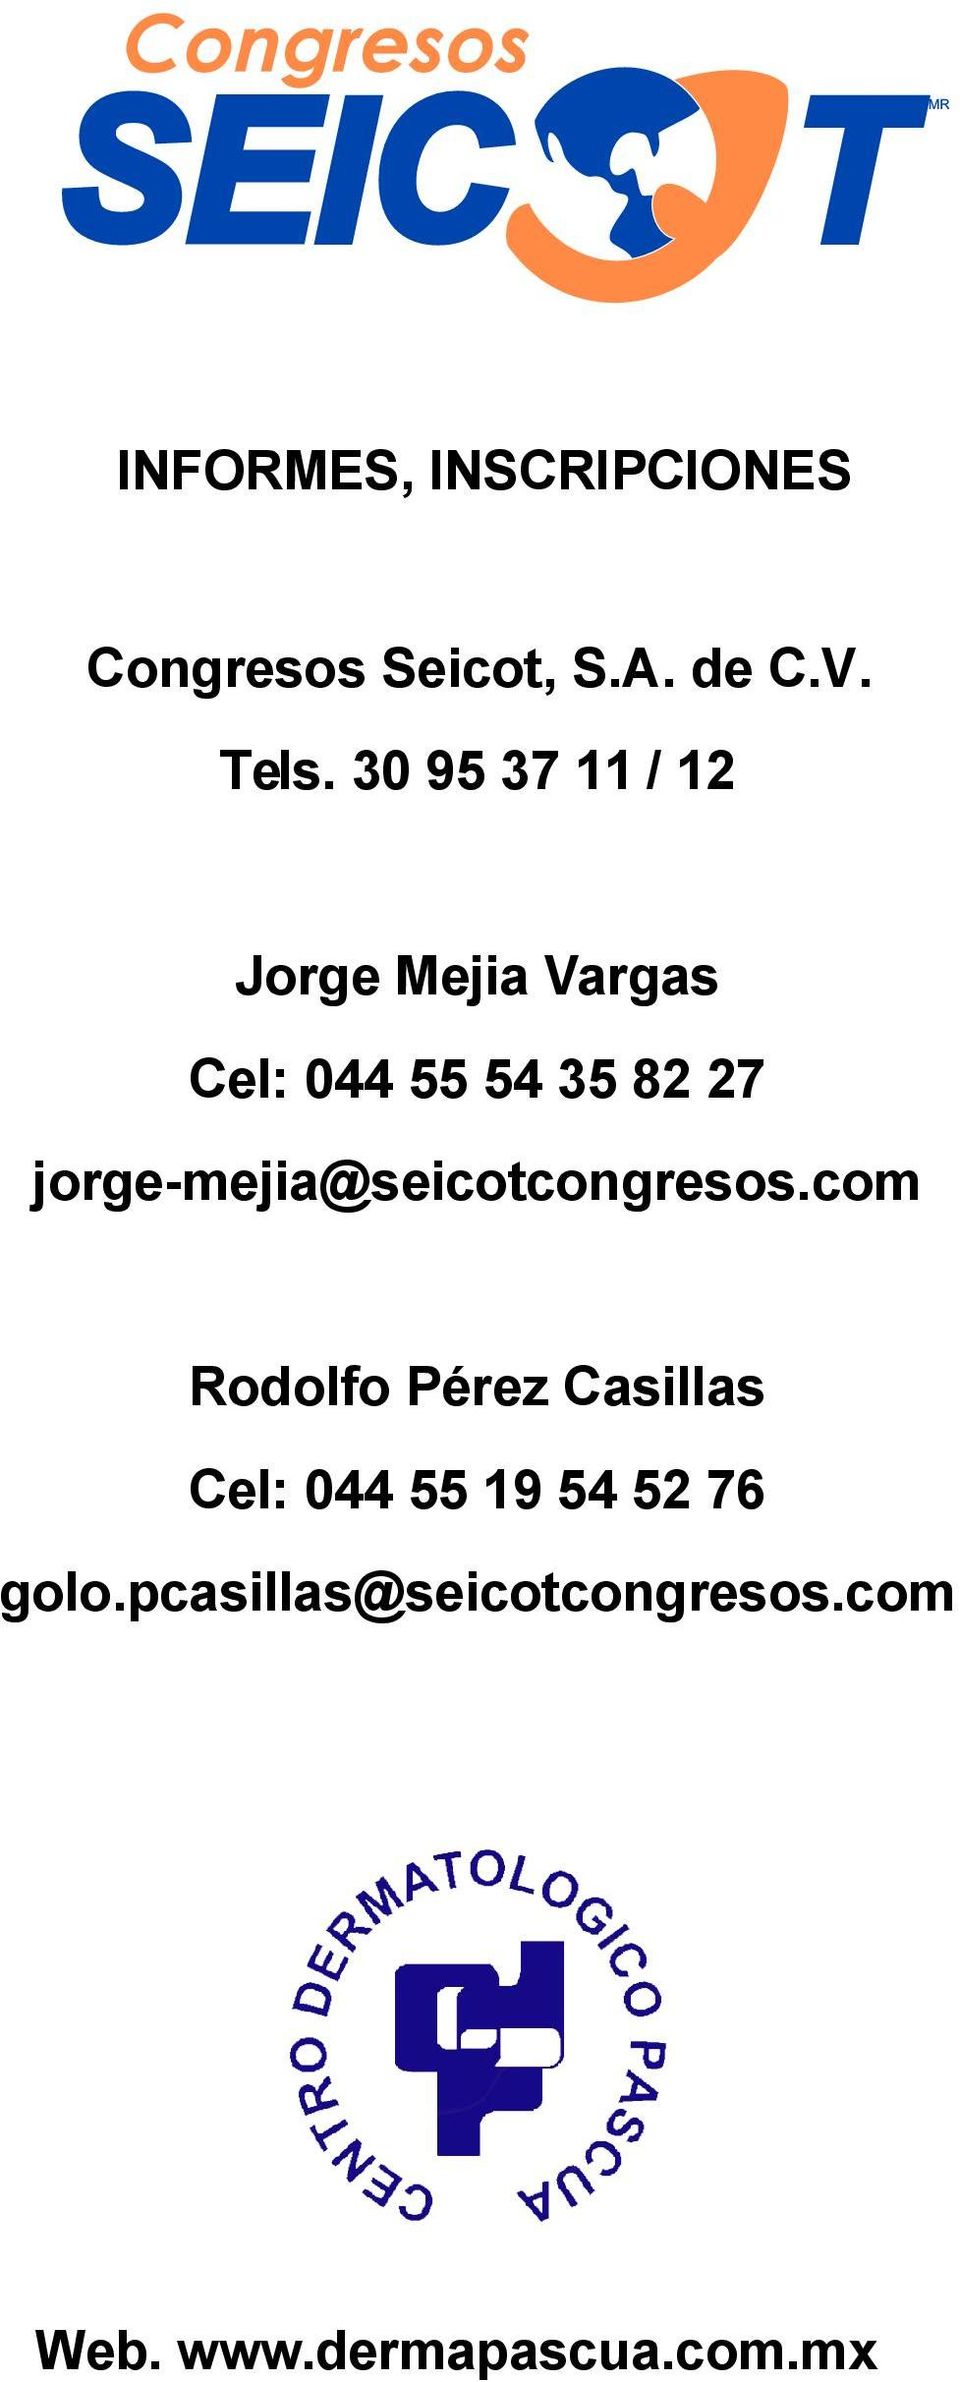 jorge-mejia@seicotcongresos.